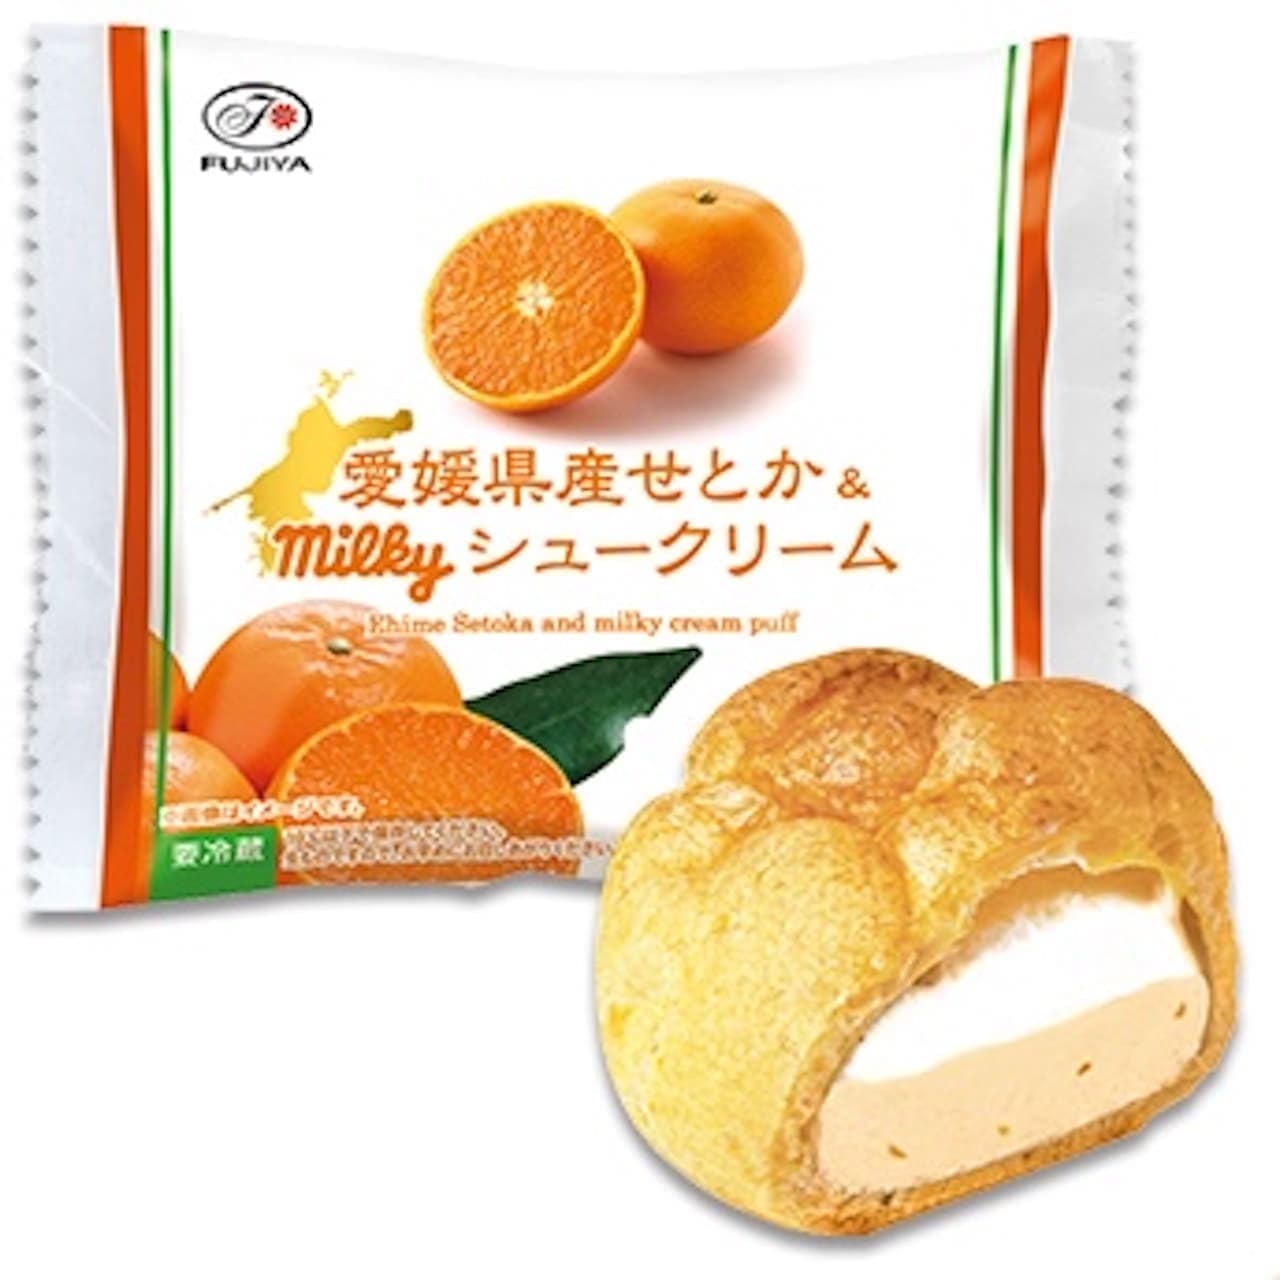 Fujiya "Ehime Senka & Milky Cream Puffs".